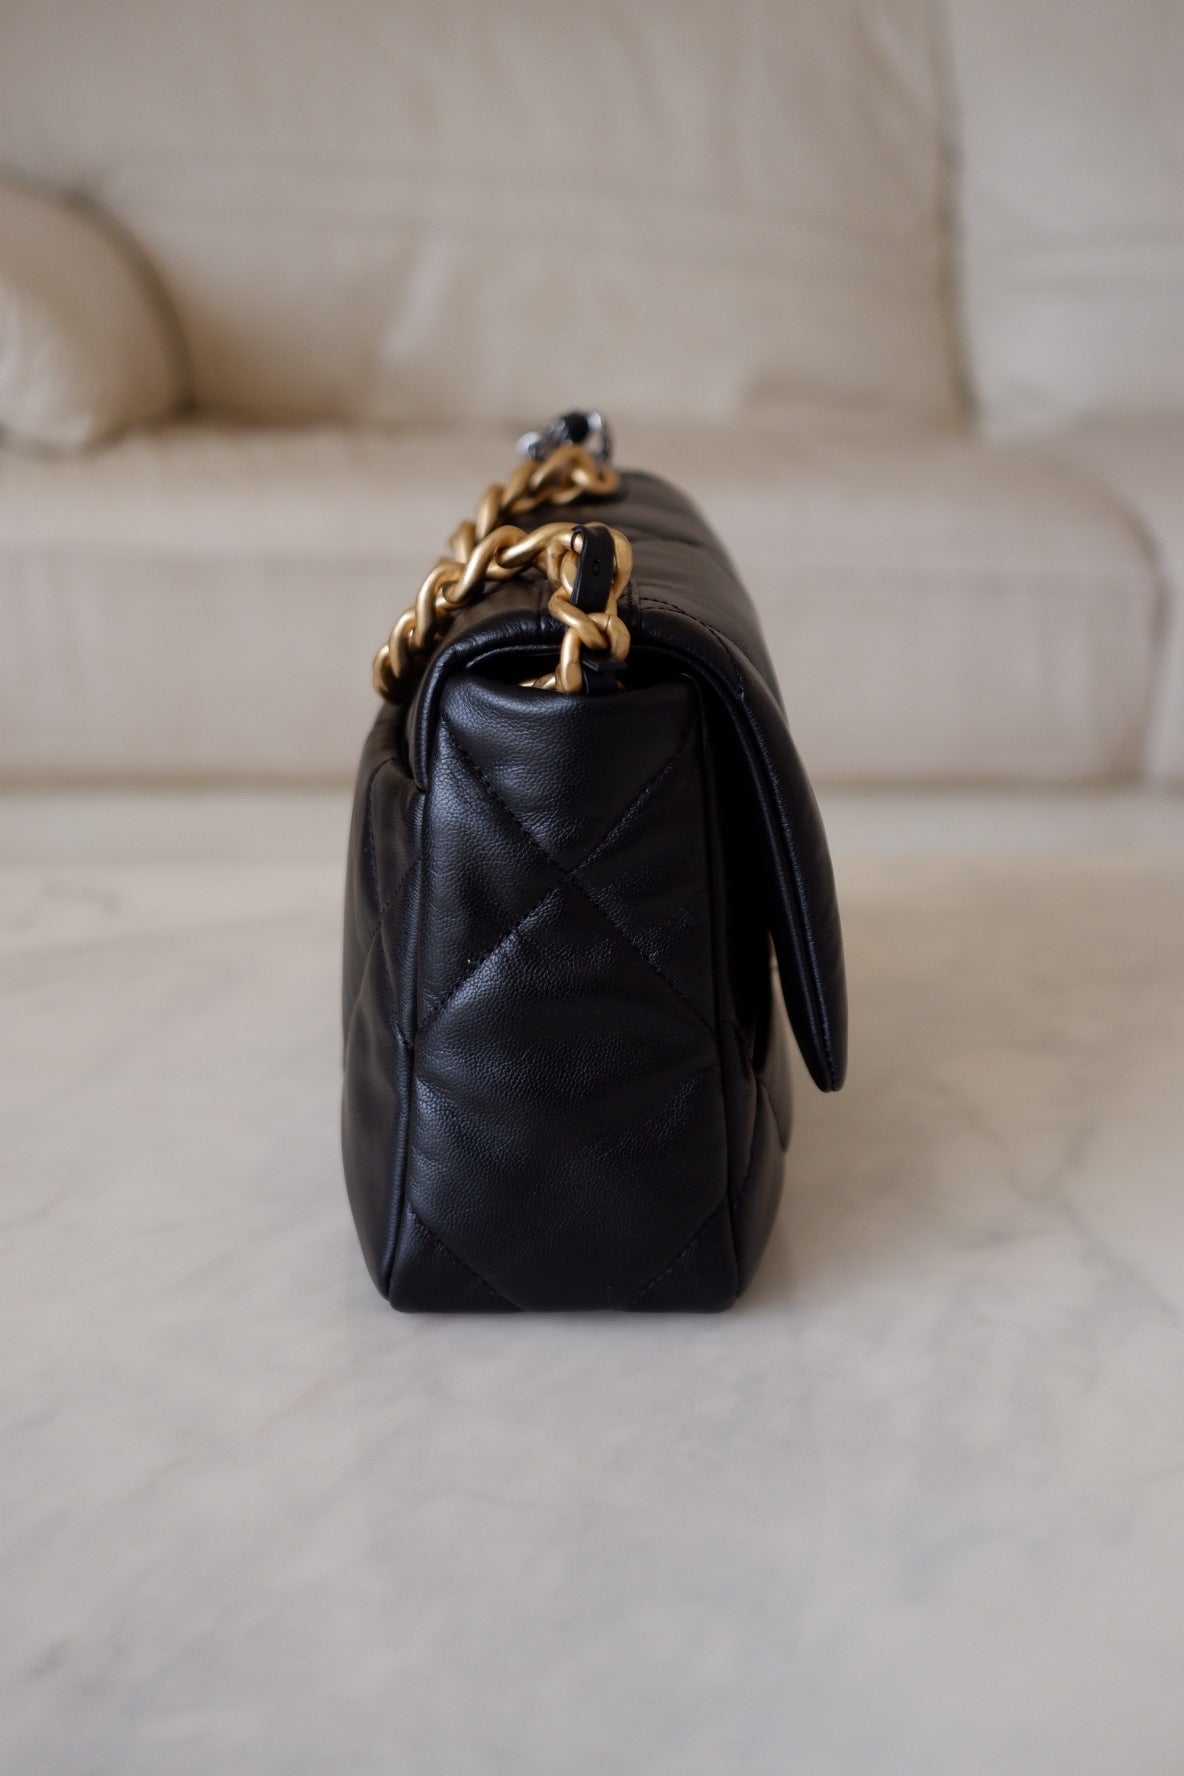 CHANEL Small 19 Black Goatskin Flap Bag Mixed Hardware – AYAINLOVE